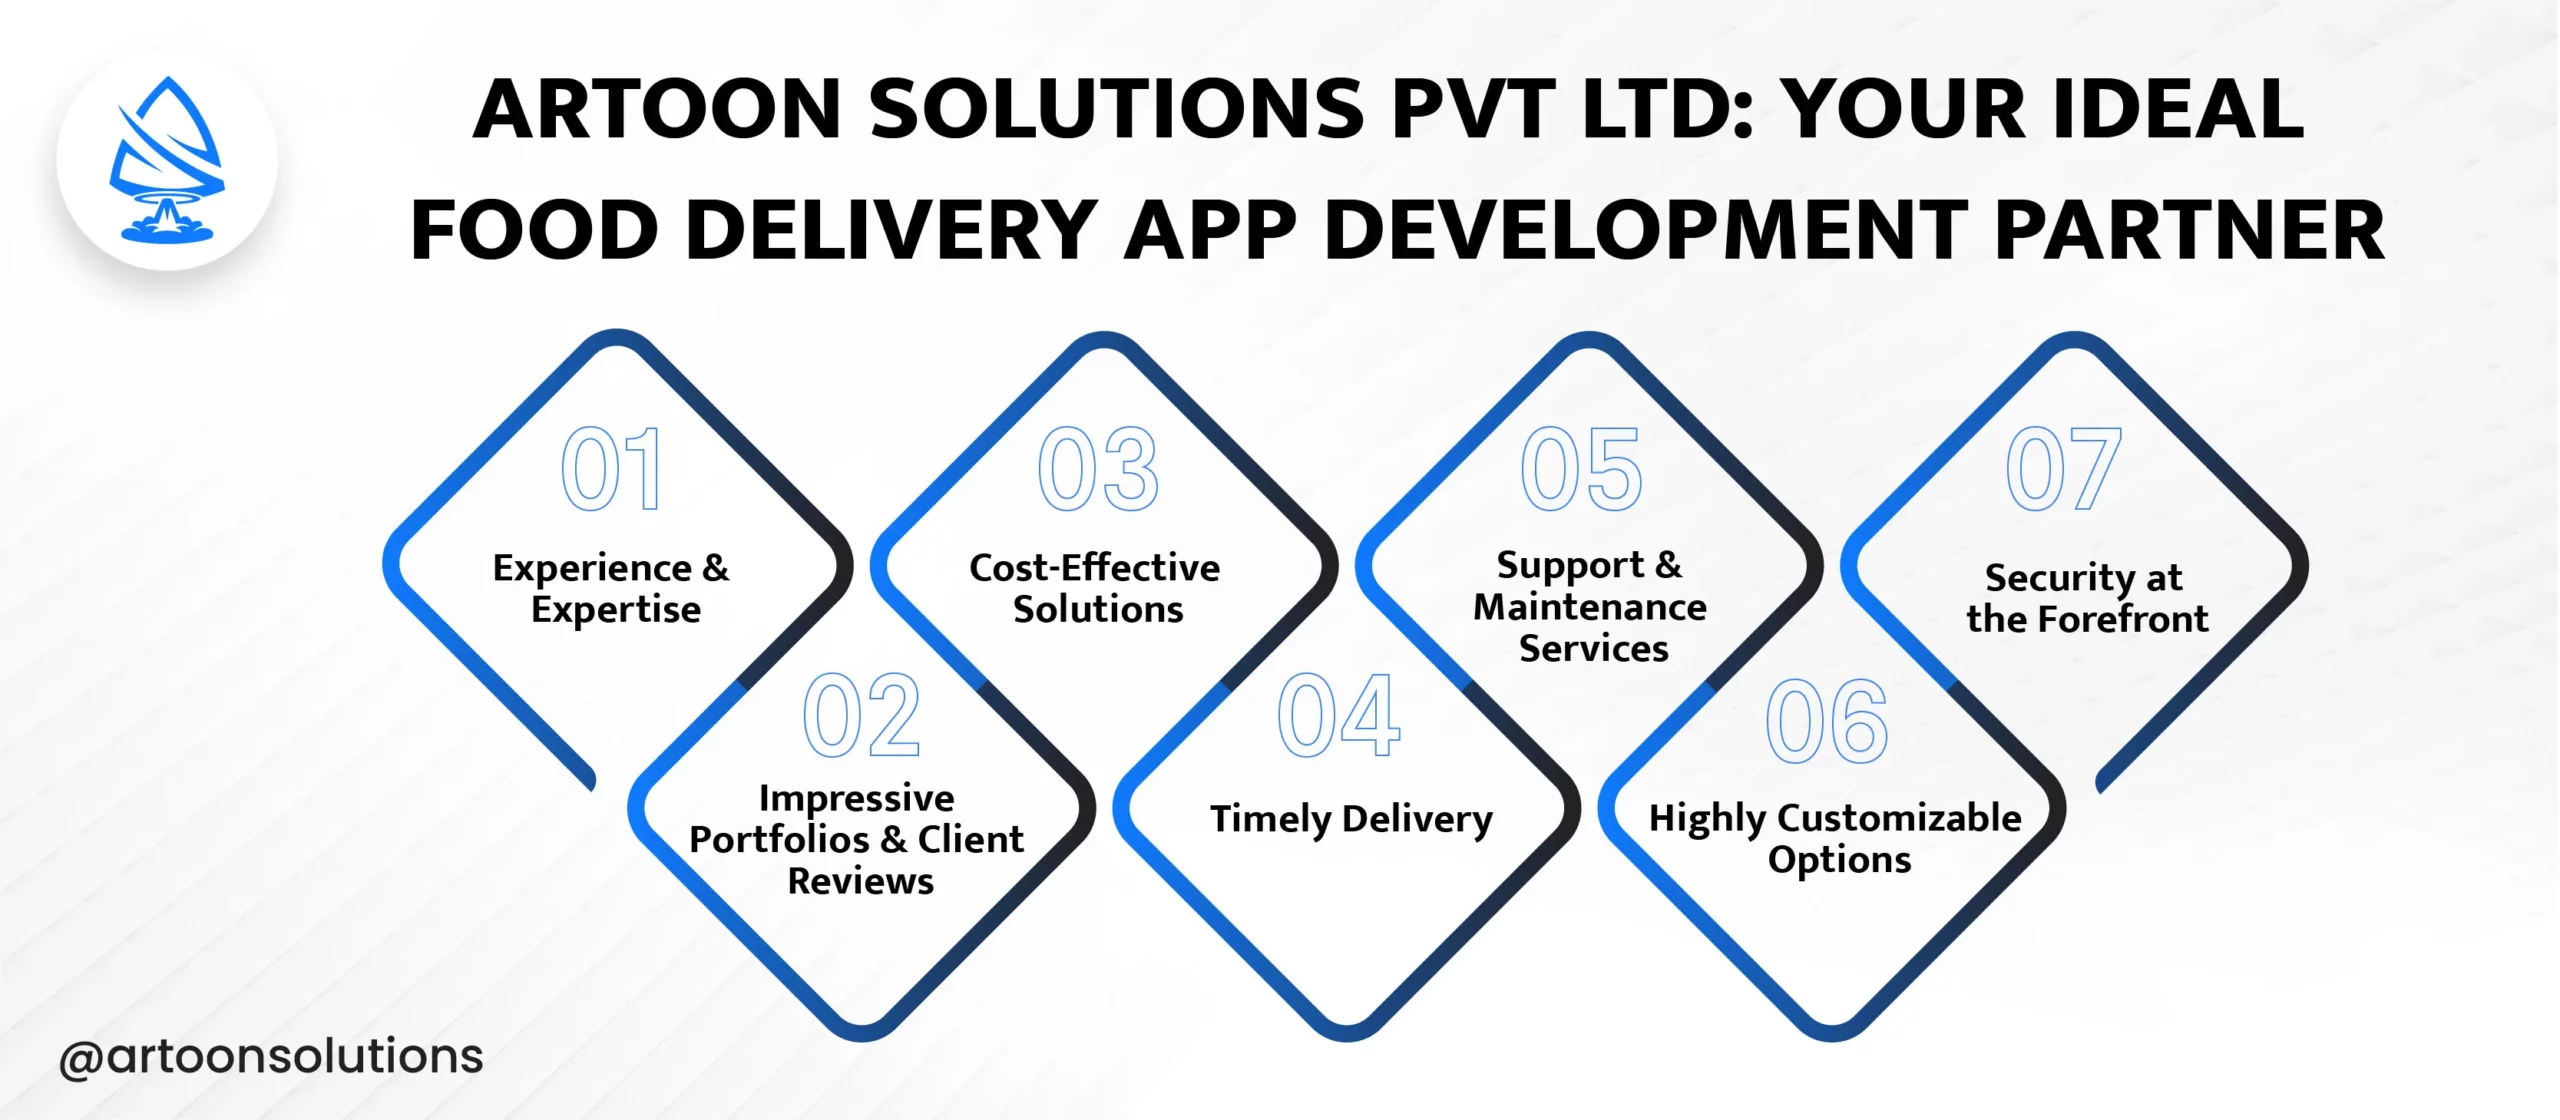 Artoon Solutions Pvt Ltd: Your Ideal App Development Partner